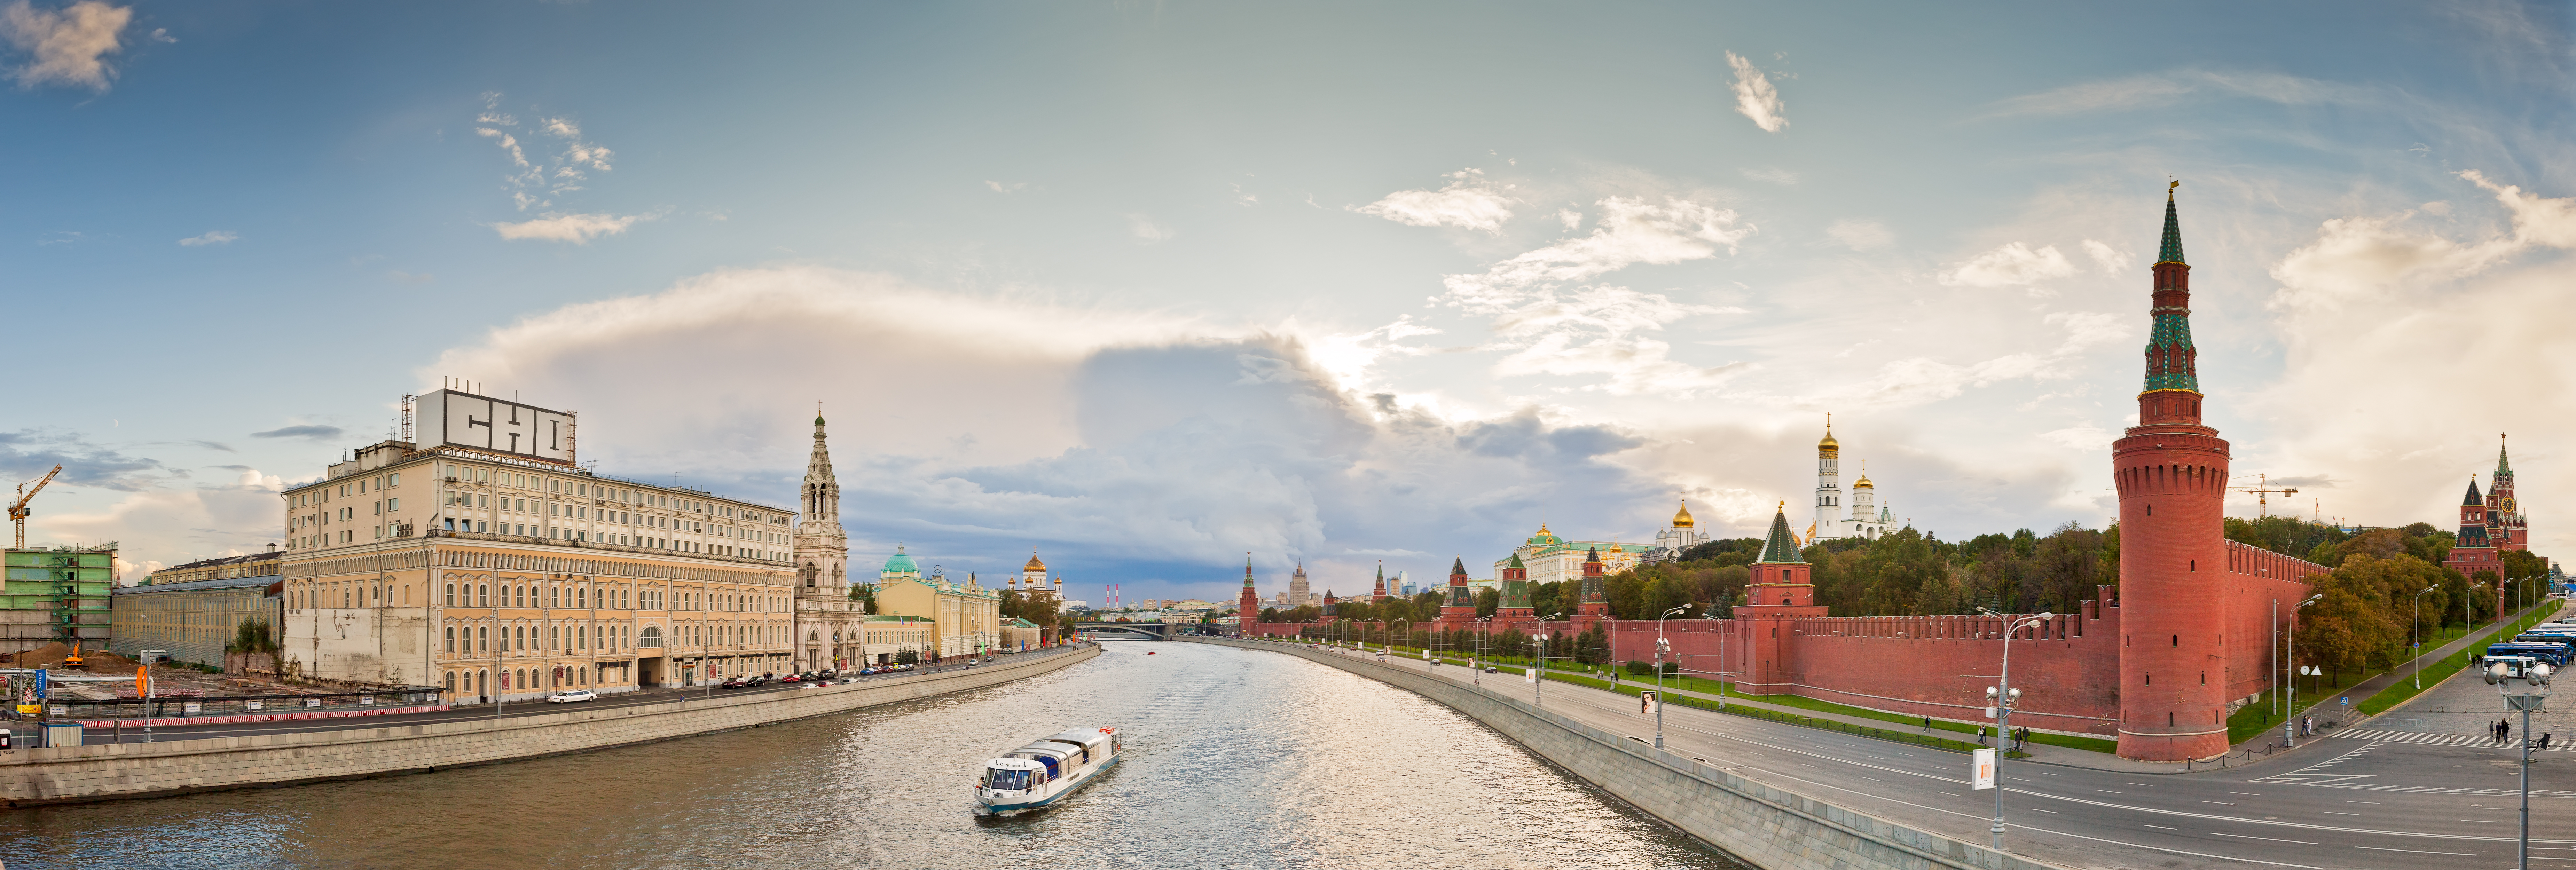 File:View to Moscow river from Bolshoy Moskvoretsky Bridge.jpg ...